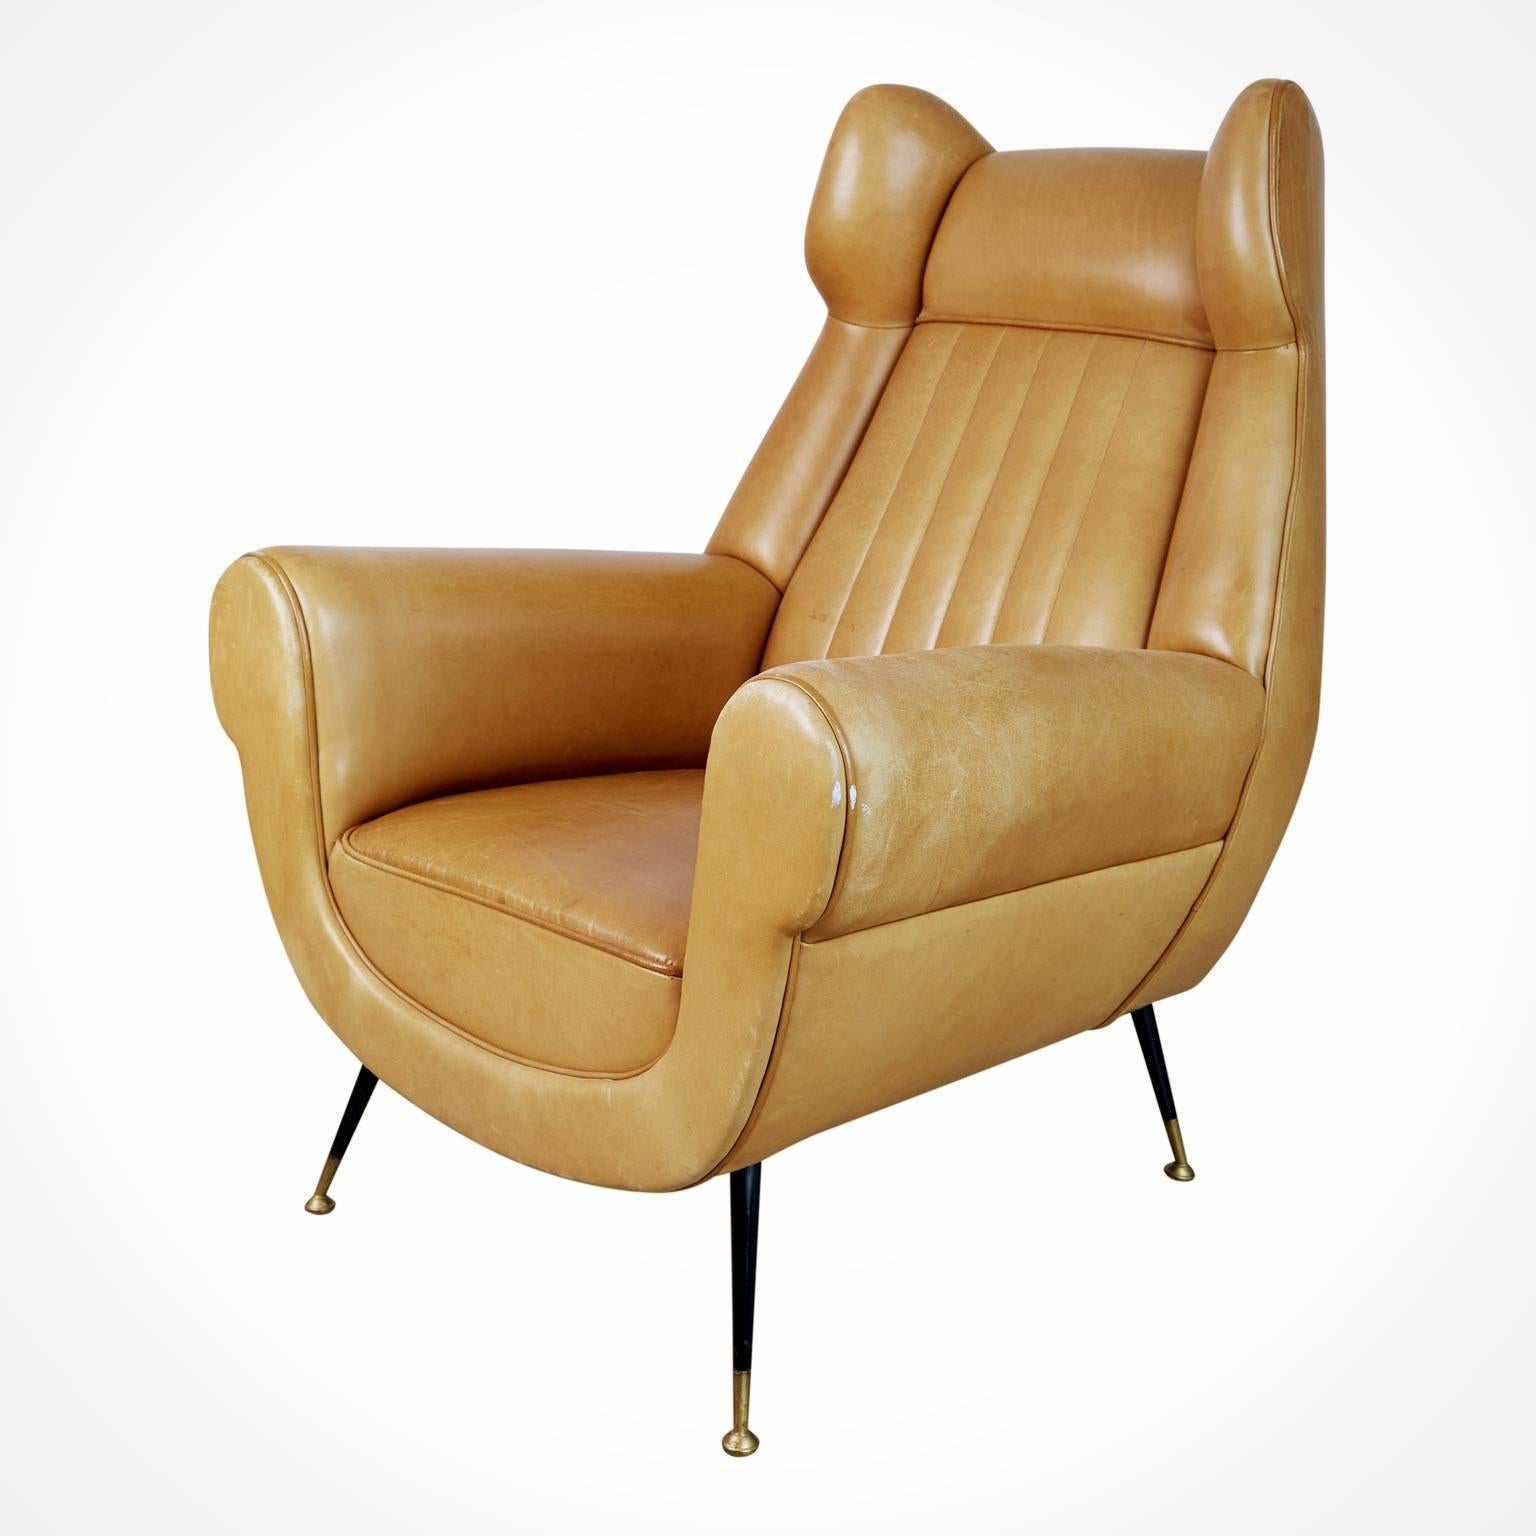 Mid-Century Modern Gigi Radice for Minotti Leather Wingback Chairs, Pair, Italy circa 1960